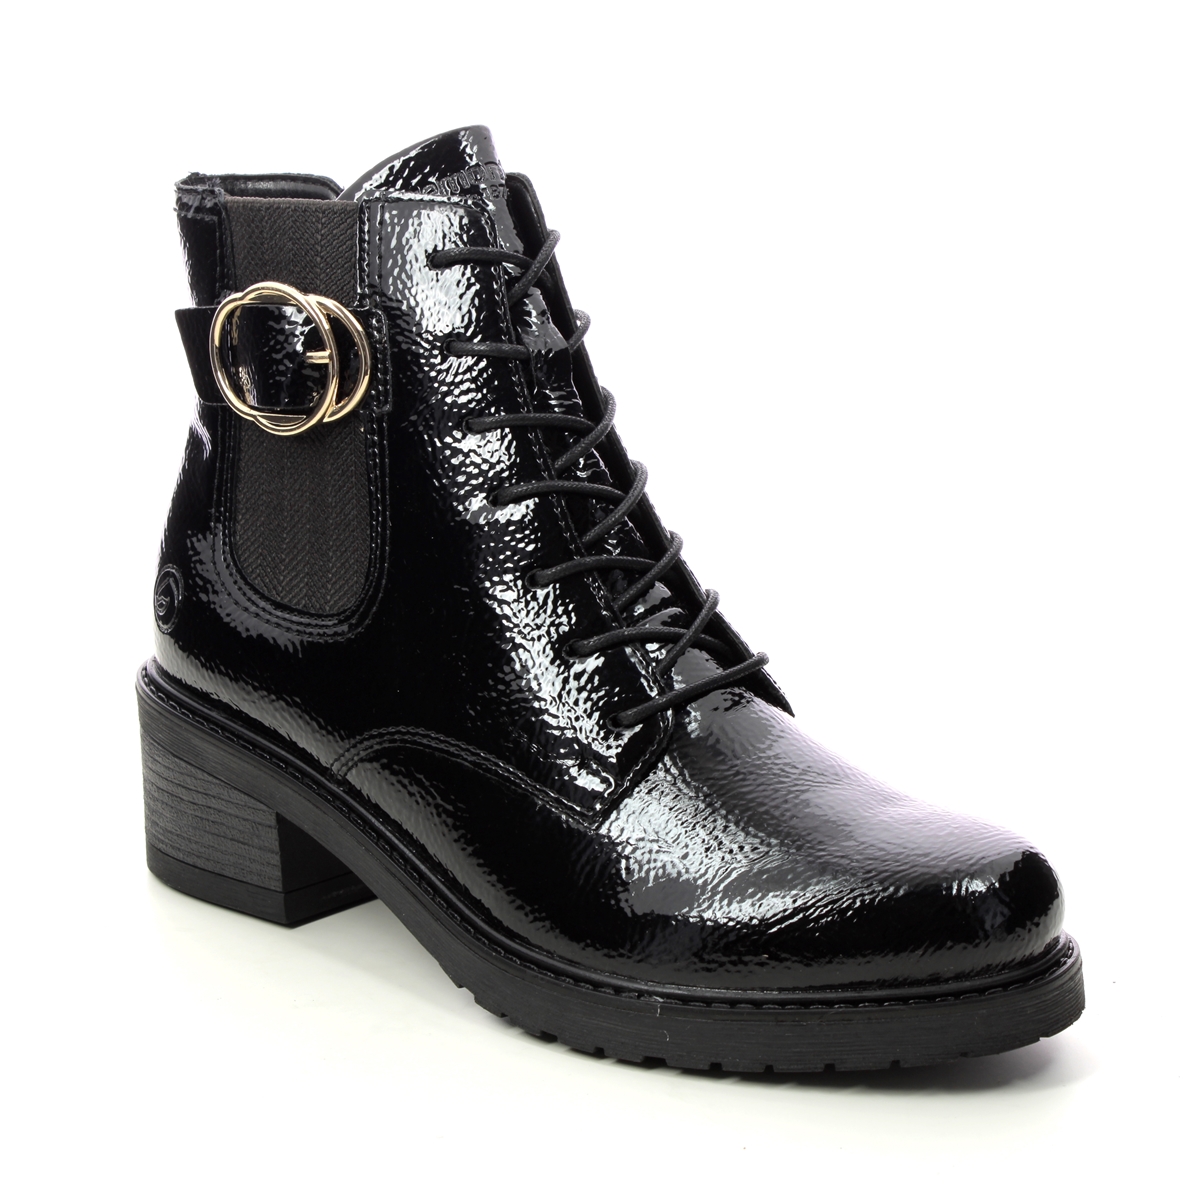 Remonte Menarem Buck Black Patent Womens Lace Up Boots D1A72-01 In Size 38 In Plain Black Patent